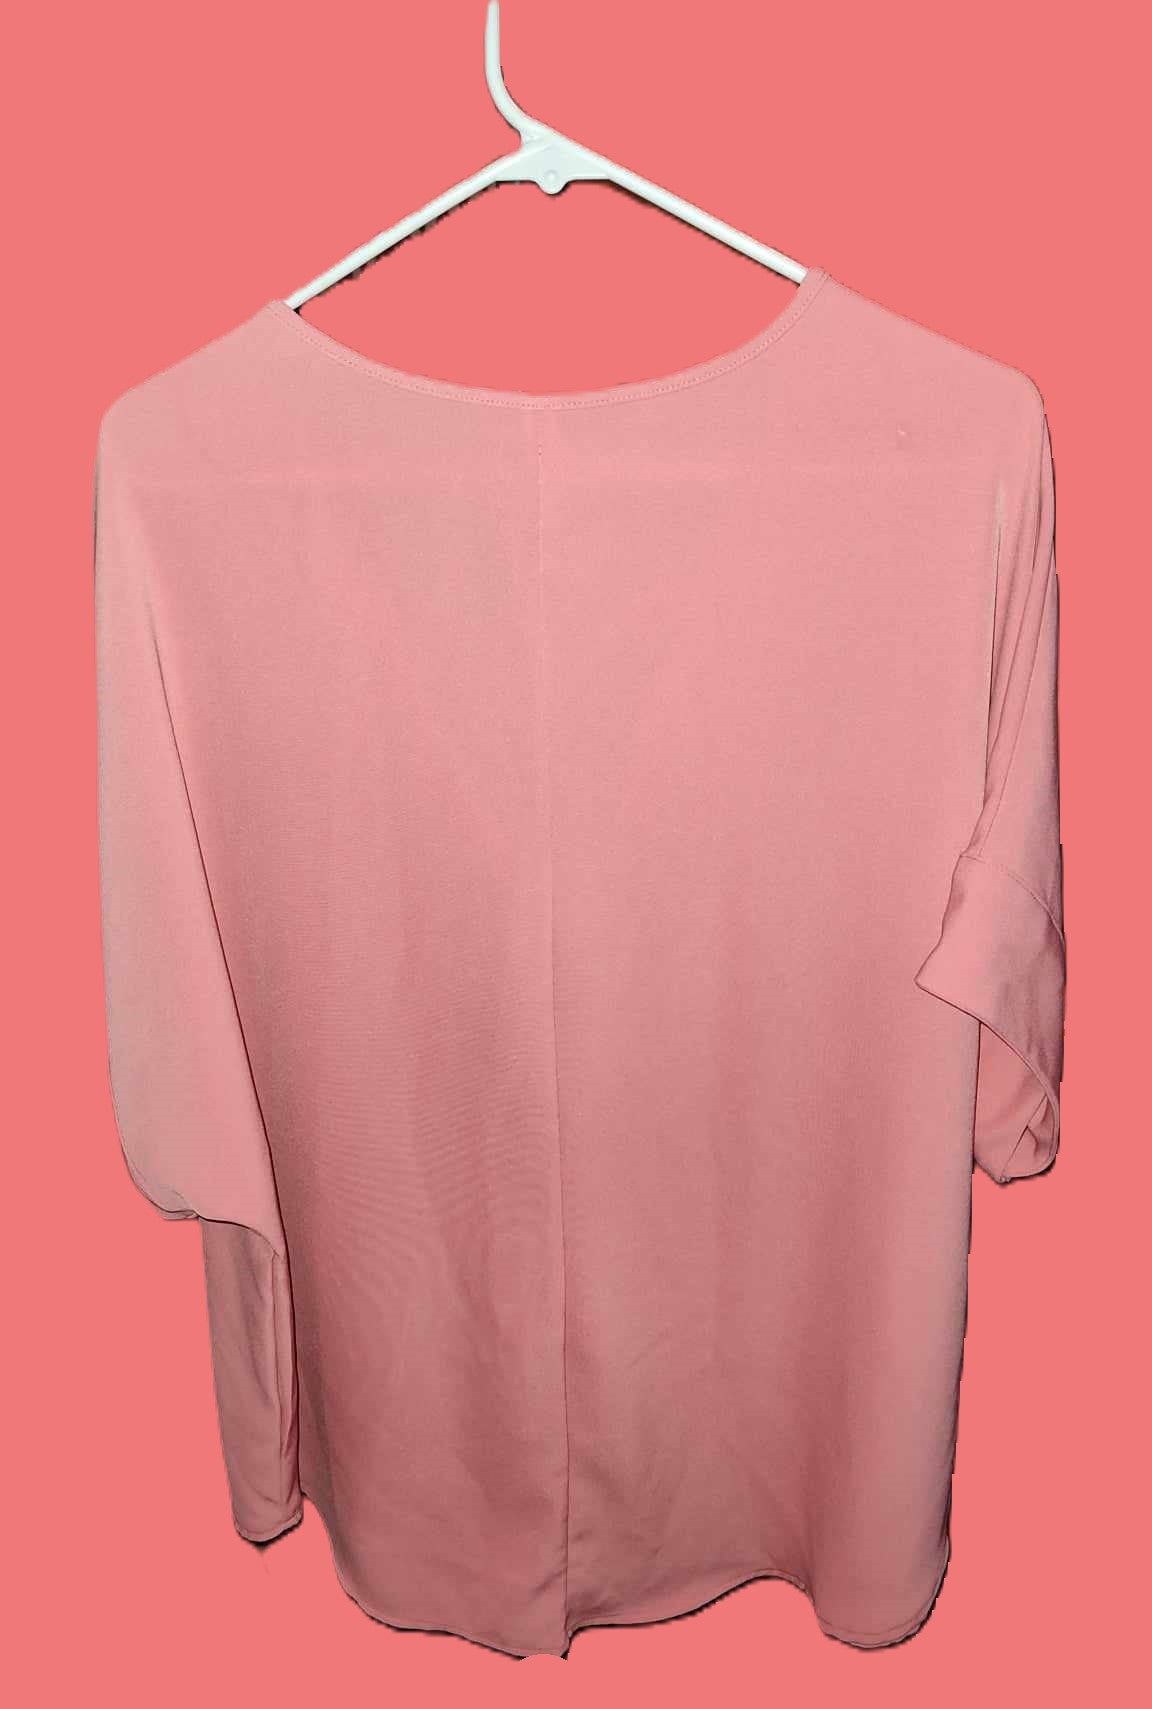 Zenana Premium Pale Pink Plus Size V-neck Top - preowned